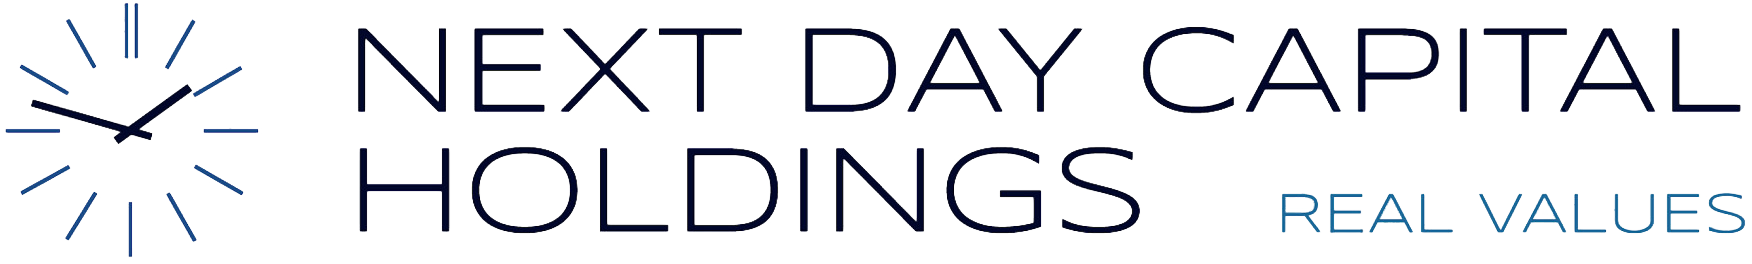 Next Day Capital Holdings logo